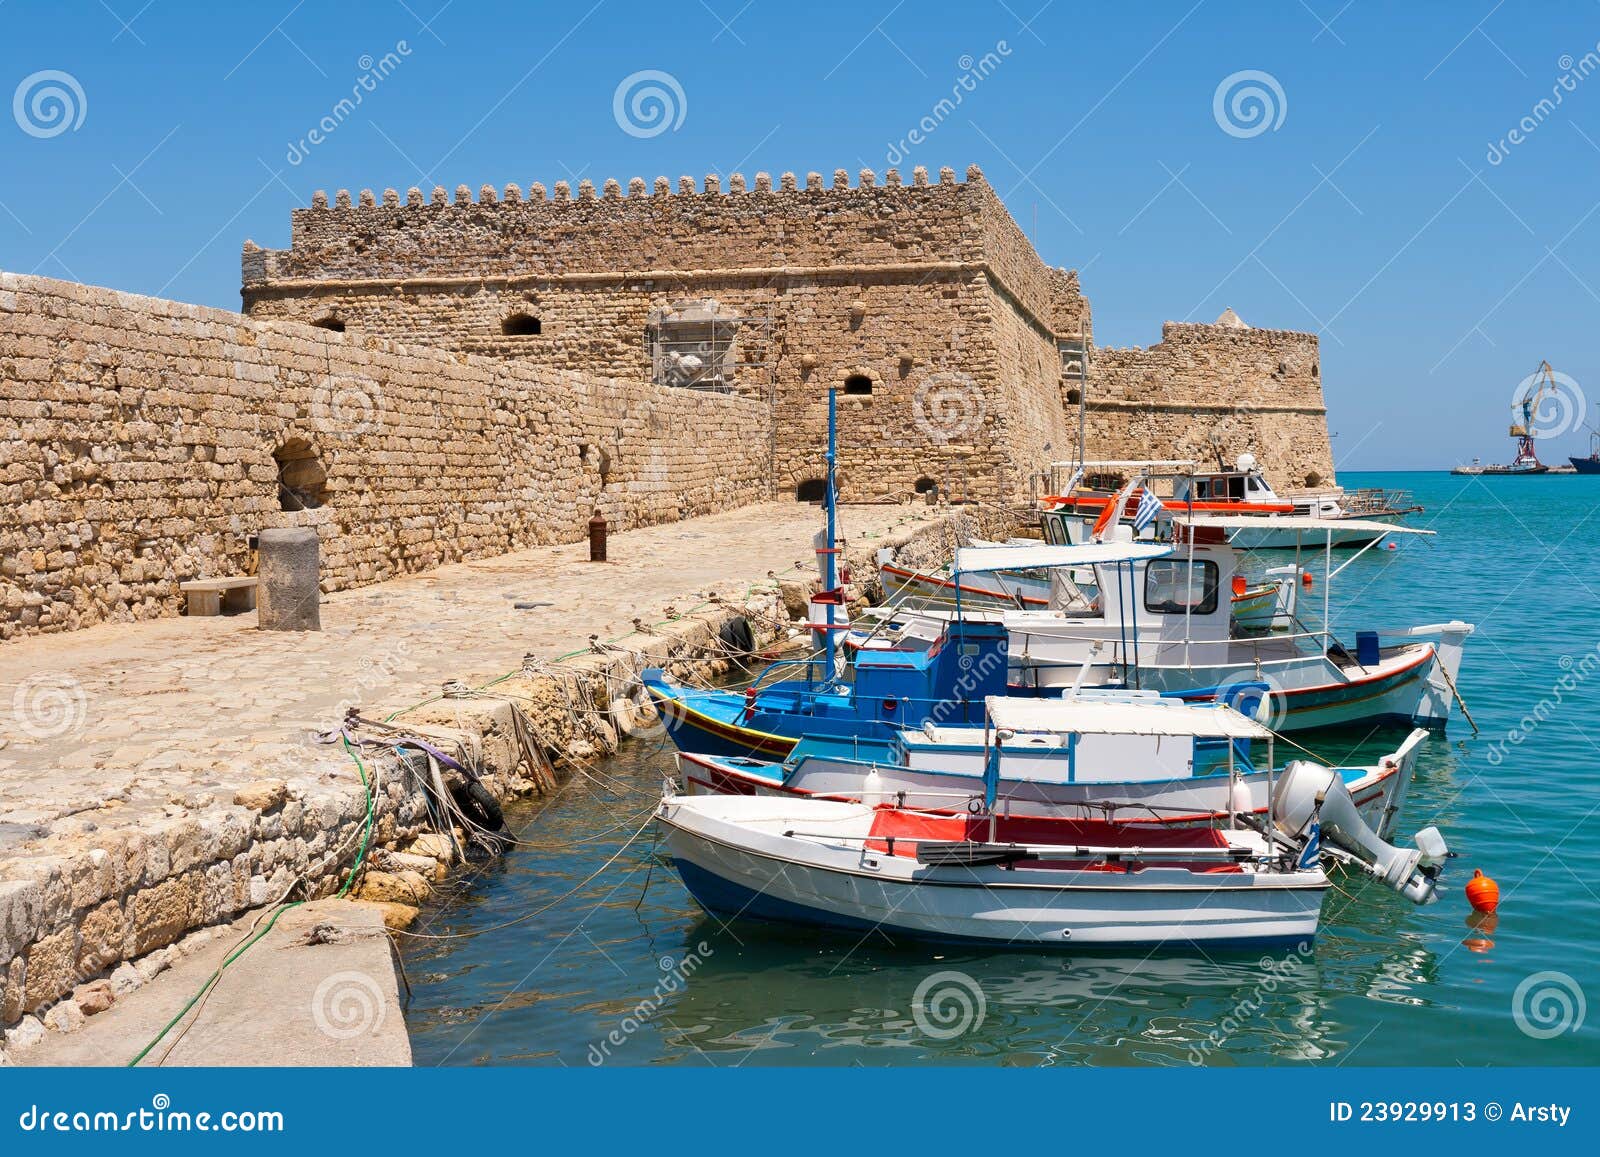 heraklion harbour and castle. crete, greece